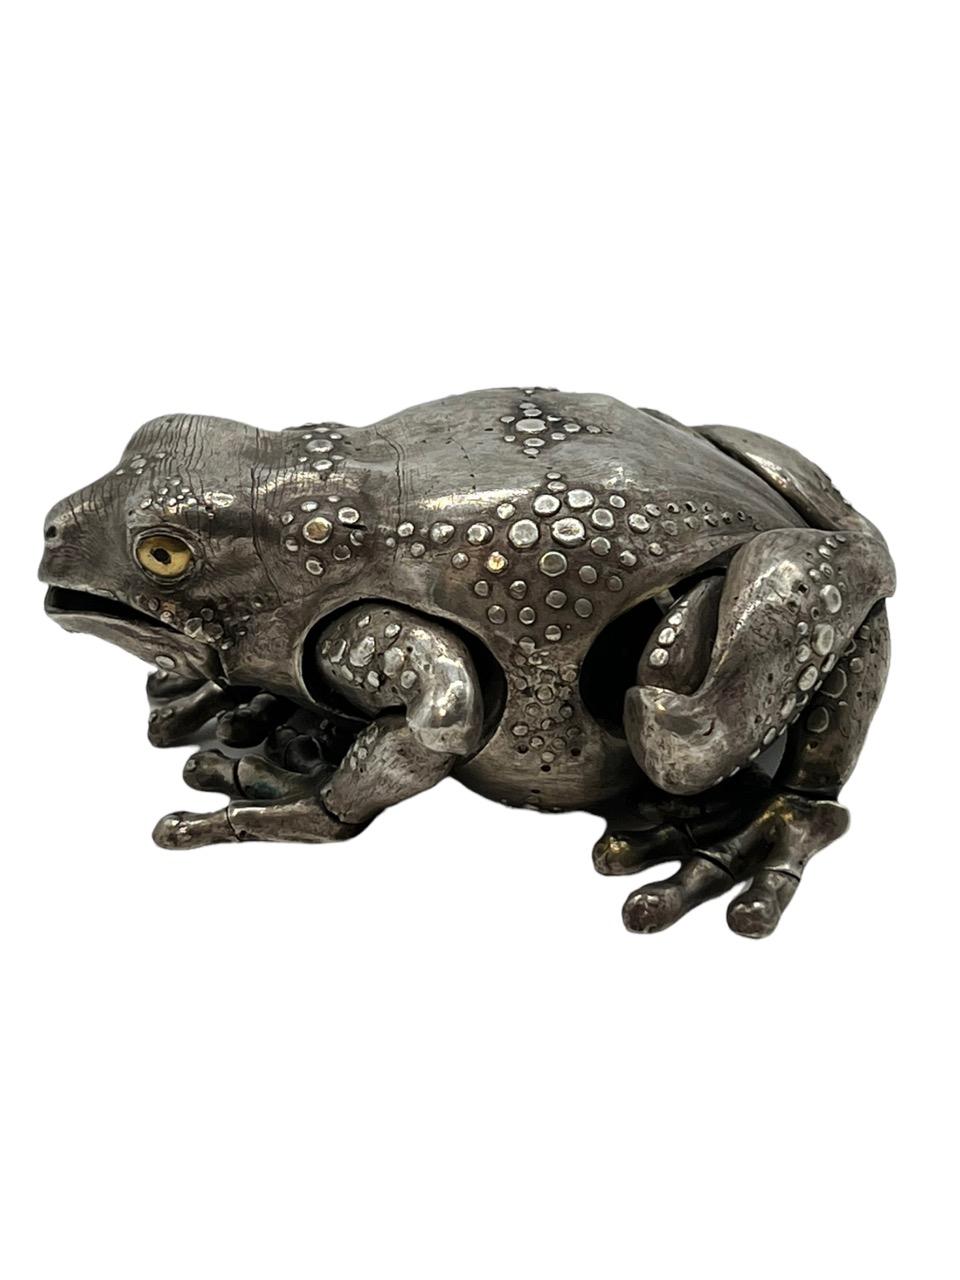 Oleg Konstantinov Fully Articulated Frog Made of Sterling Silver For Sale 2